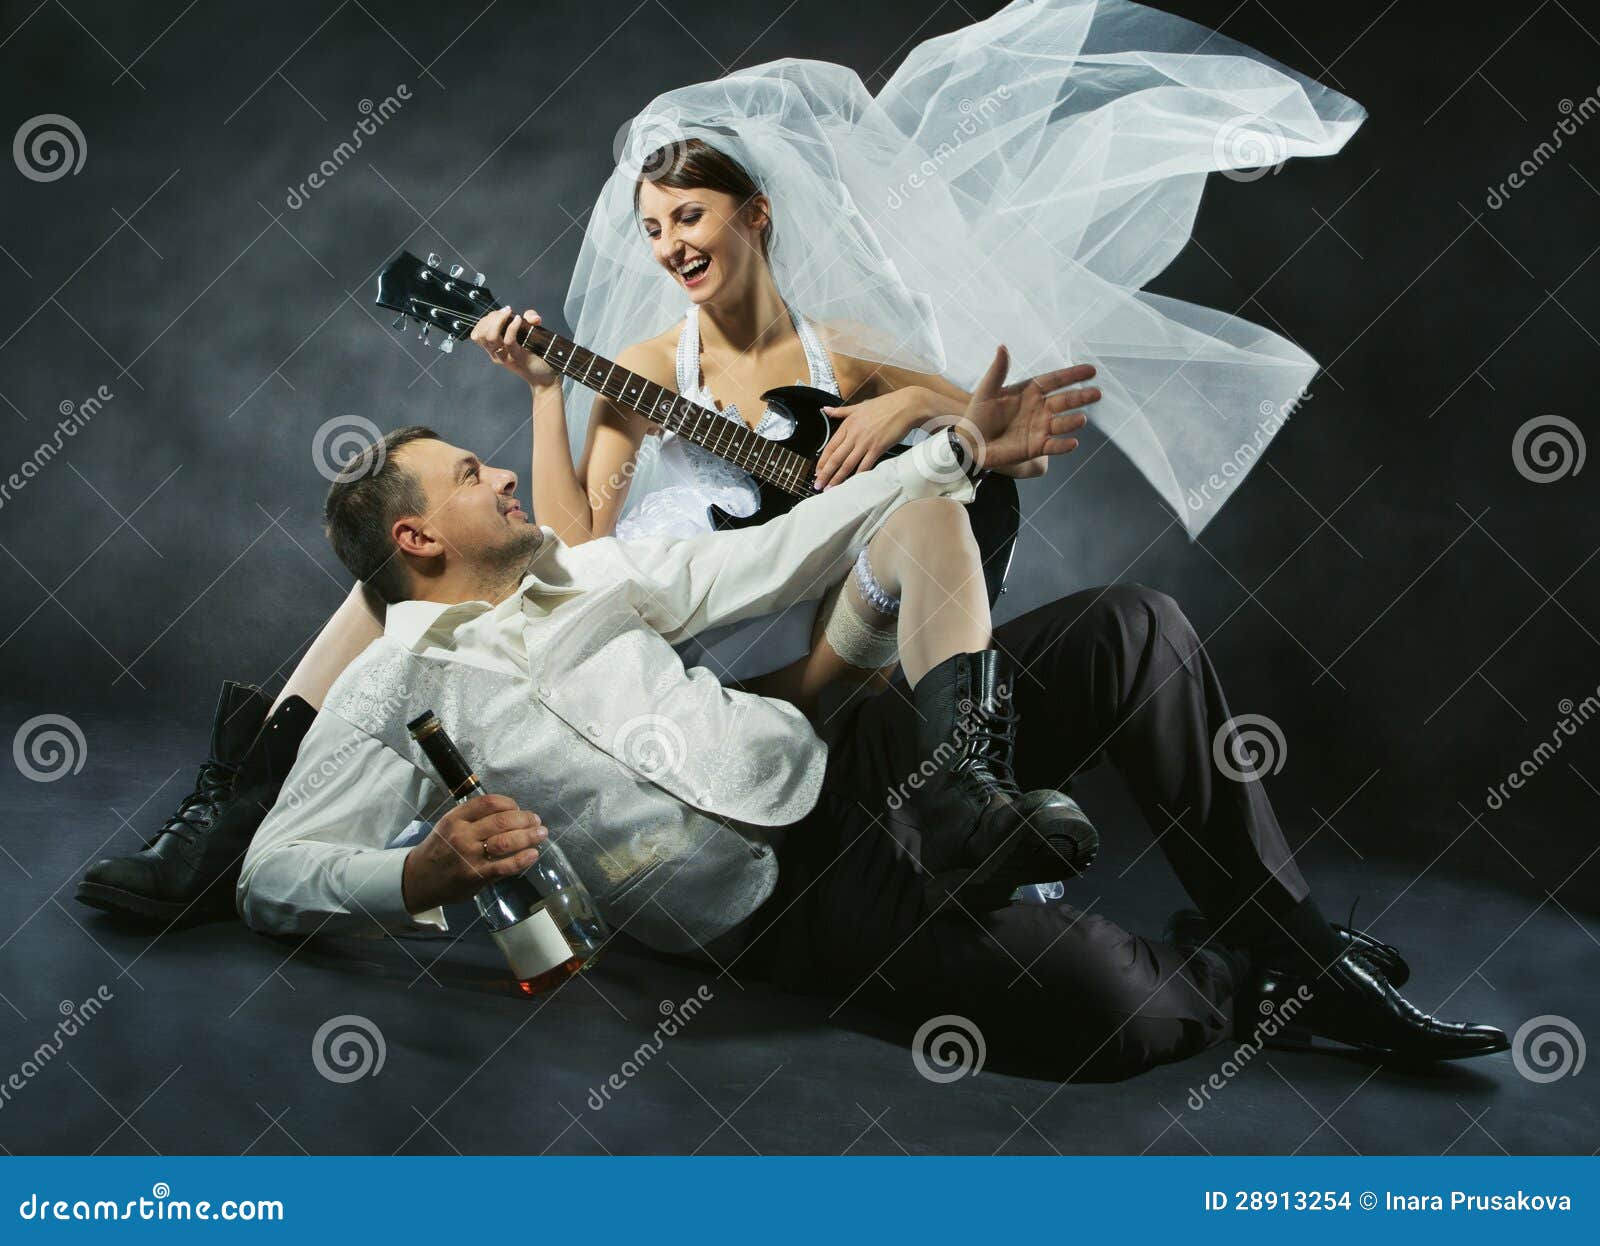 love 4 cc finds — simtrovart: Guitar Day - couple version - ...